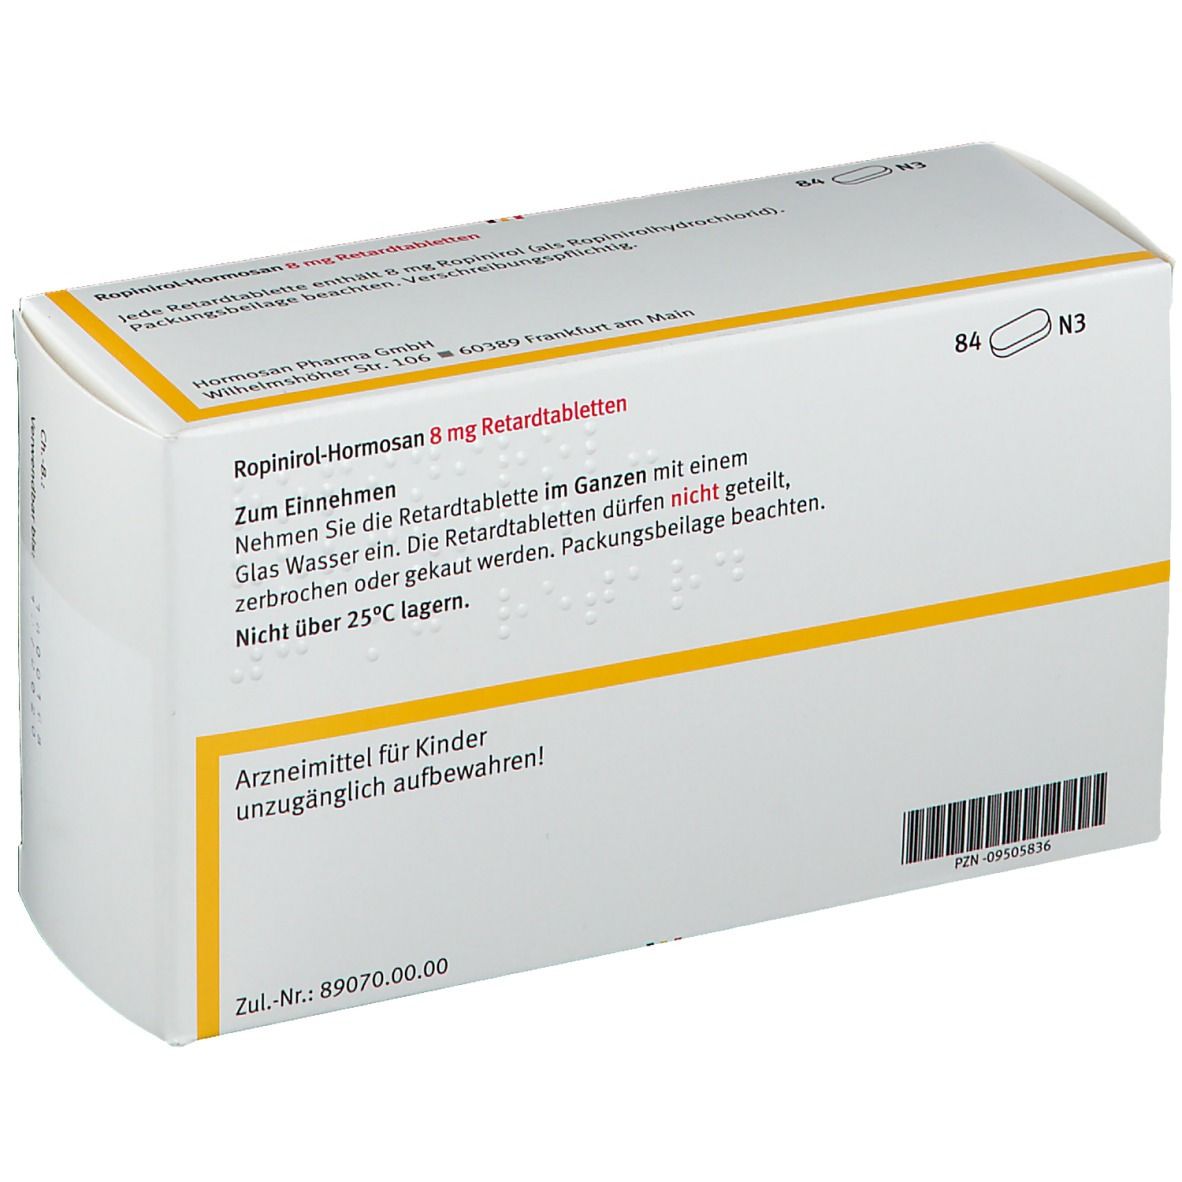 Ropinirol-Hormosan 8 mg